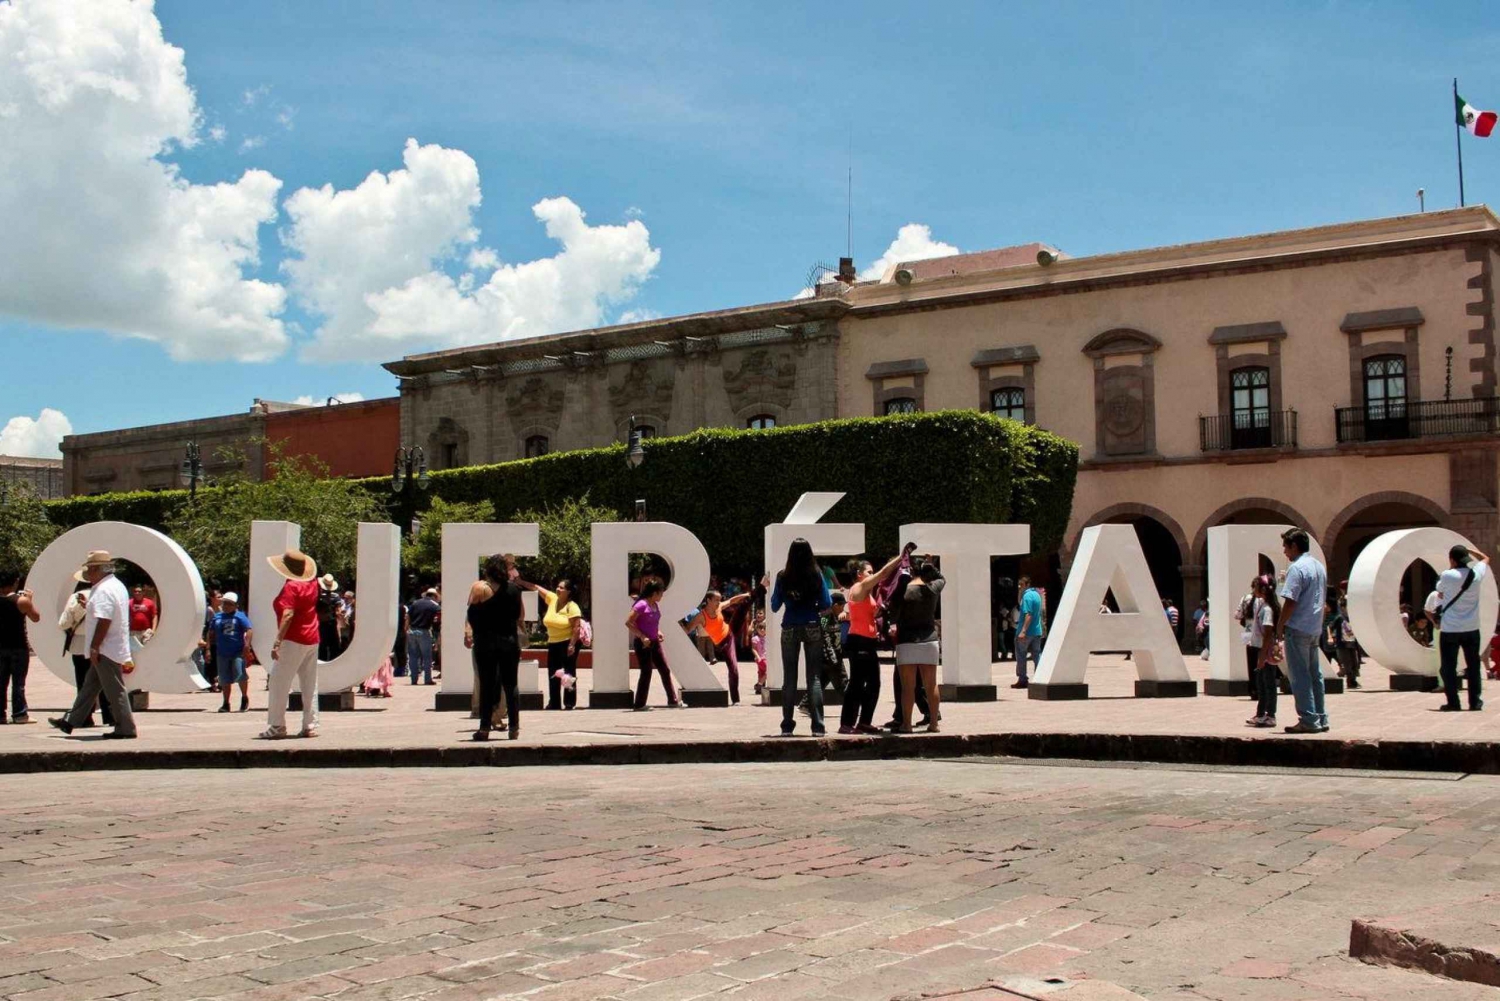 Querétaro: Independence Route Experience